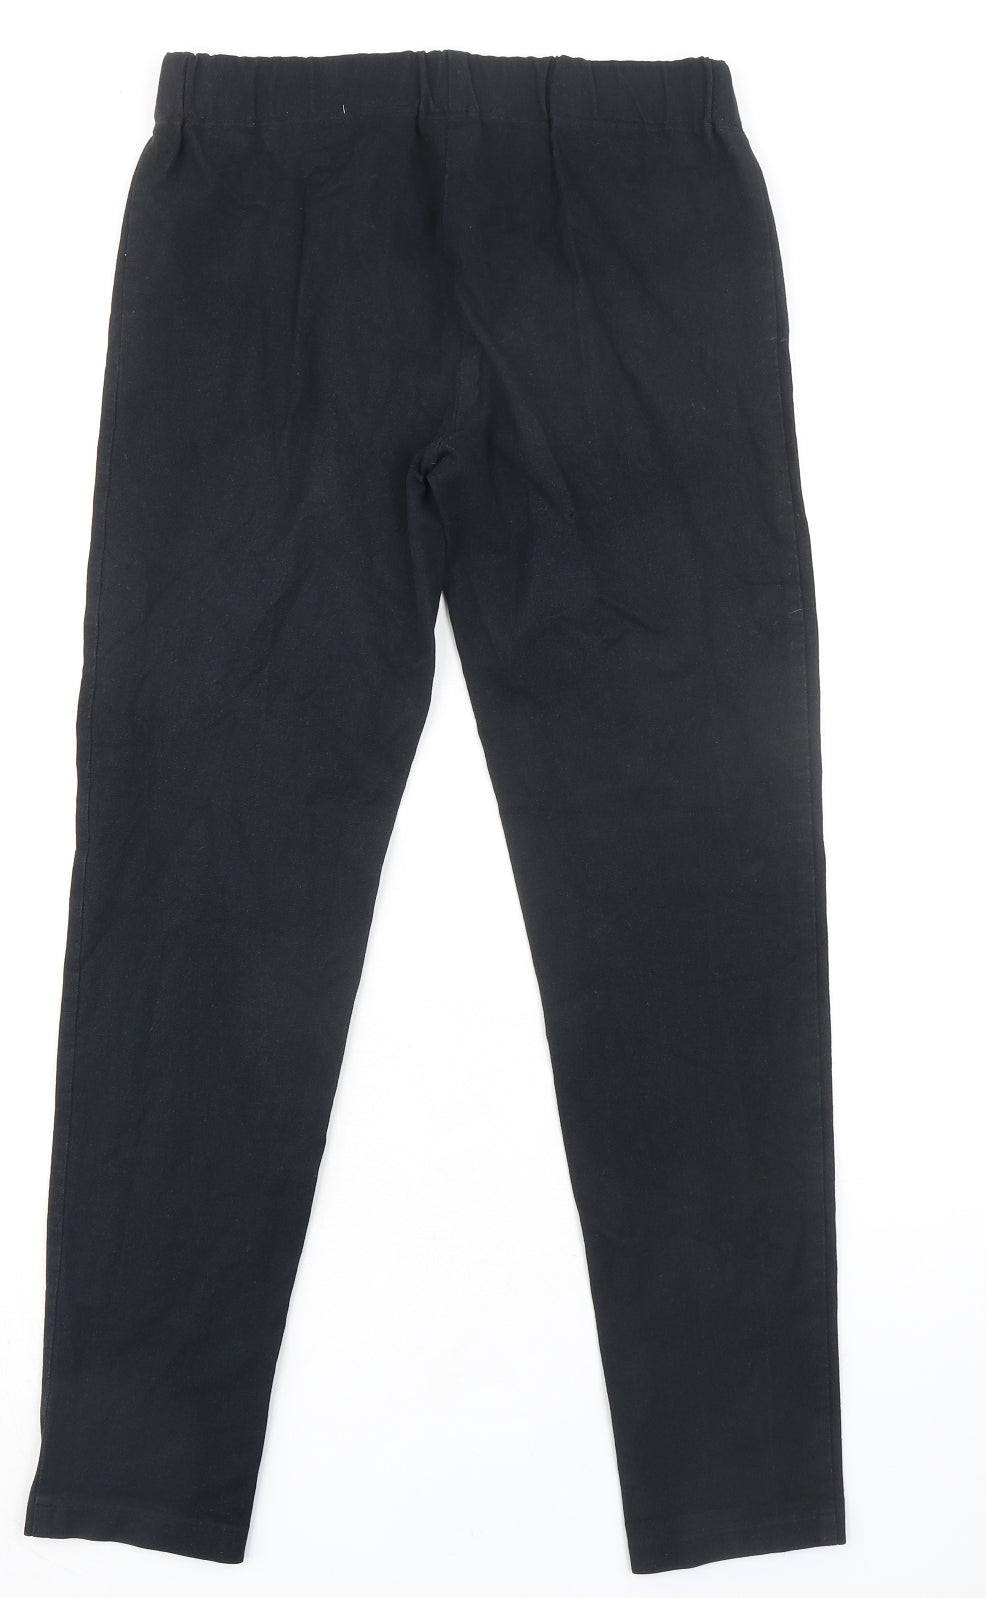 Jigsaw Womens Black Trivinyl Trousers Size 12 L30 in Regular